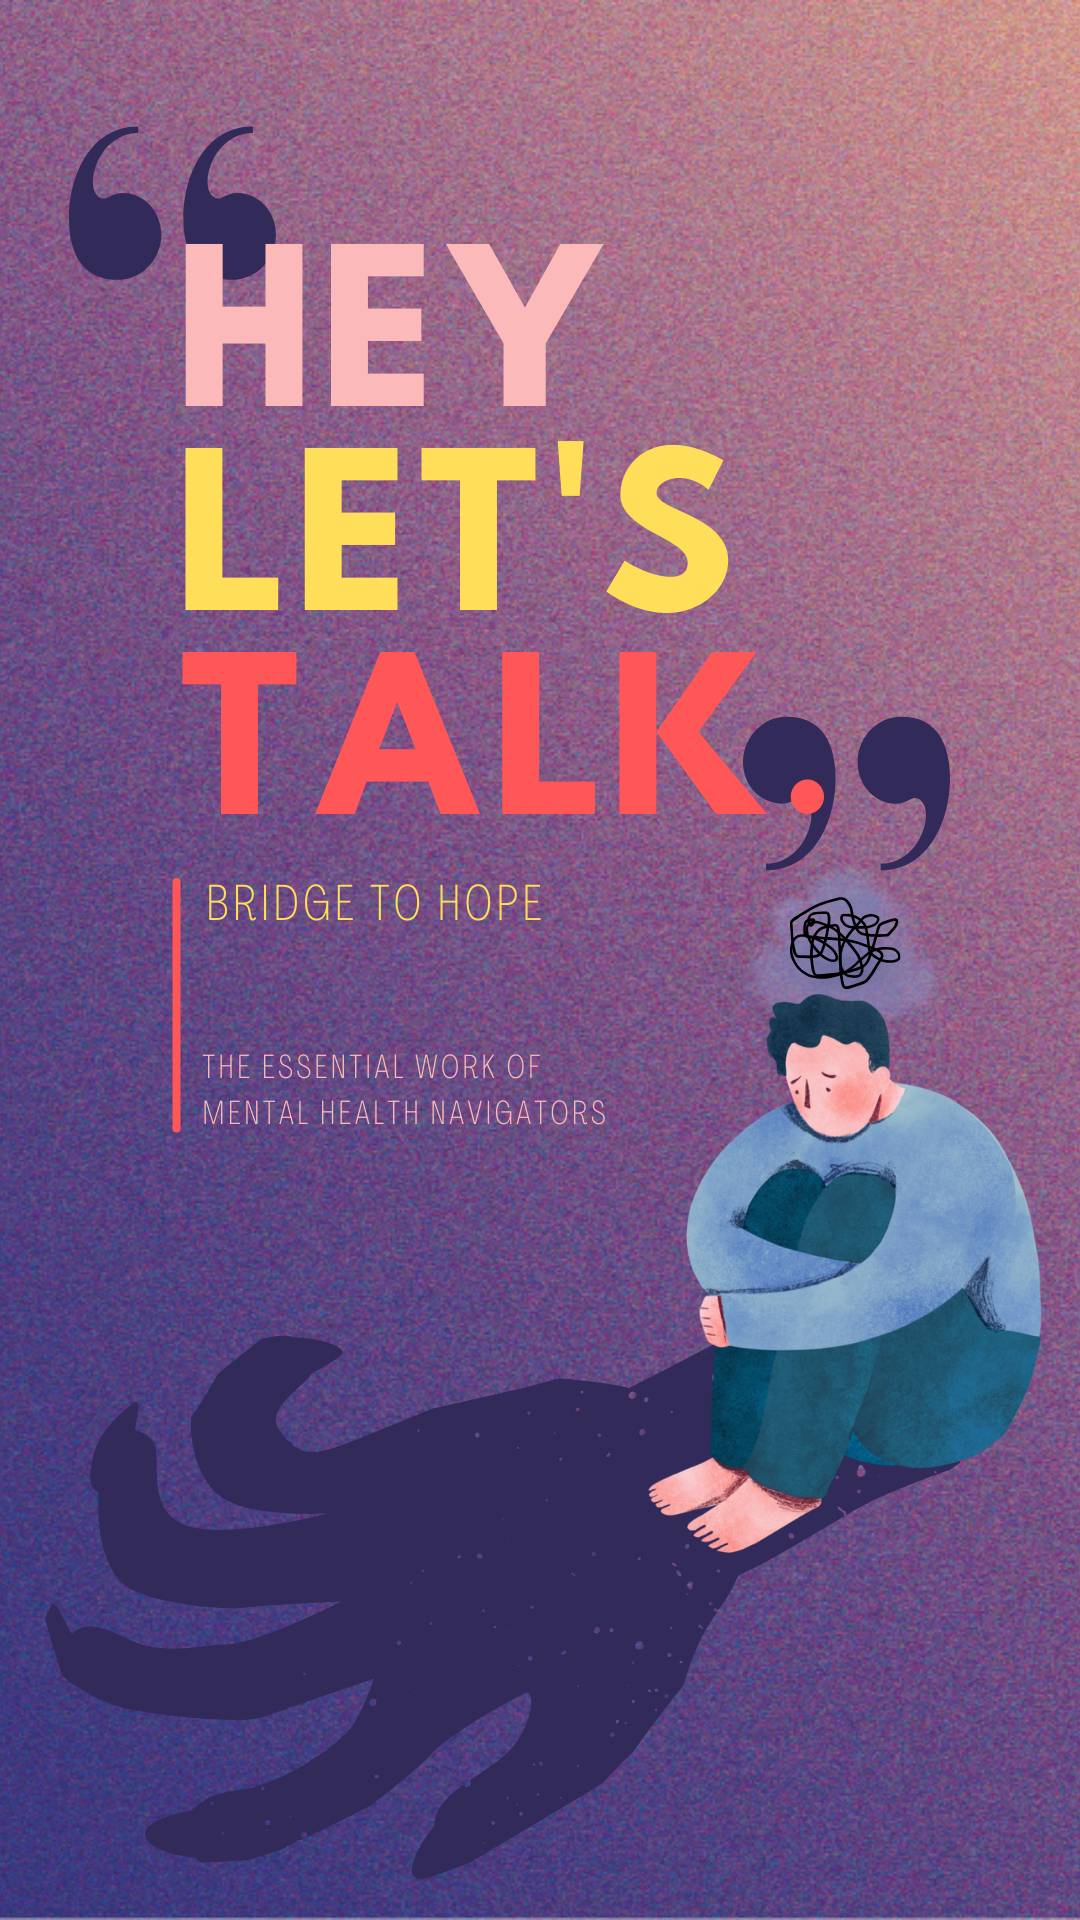 Bridge to hope mental health navigator